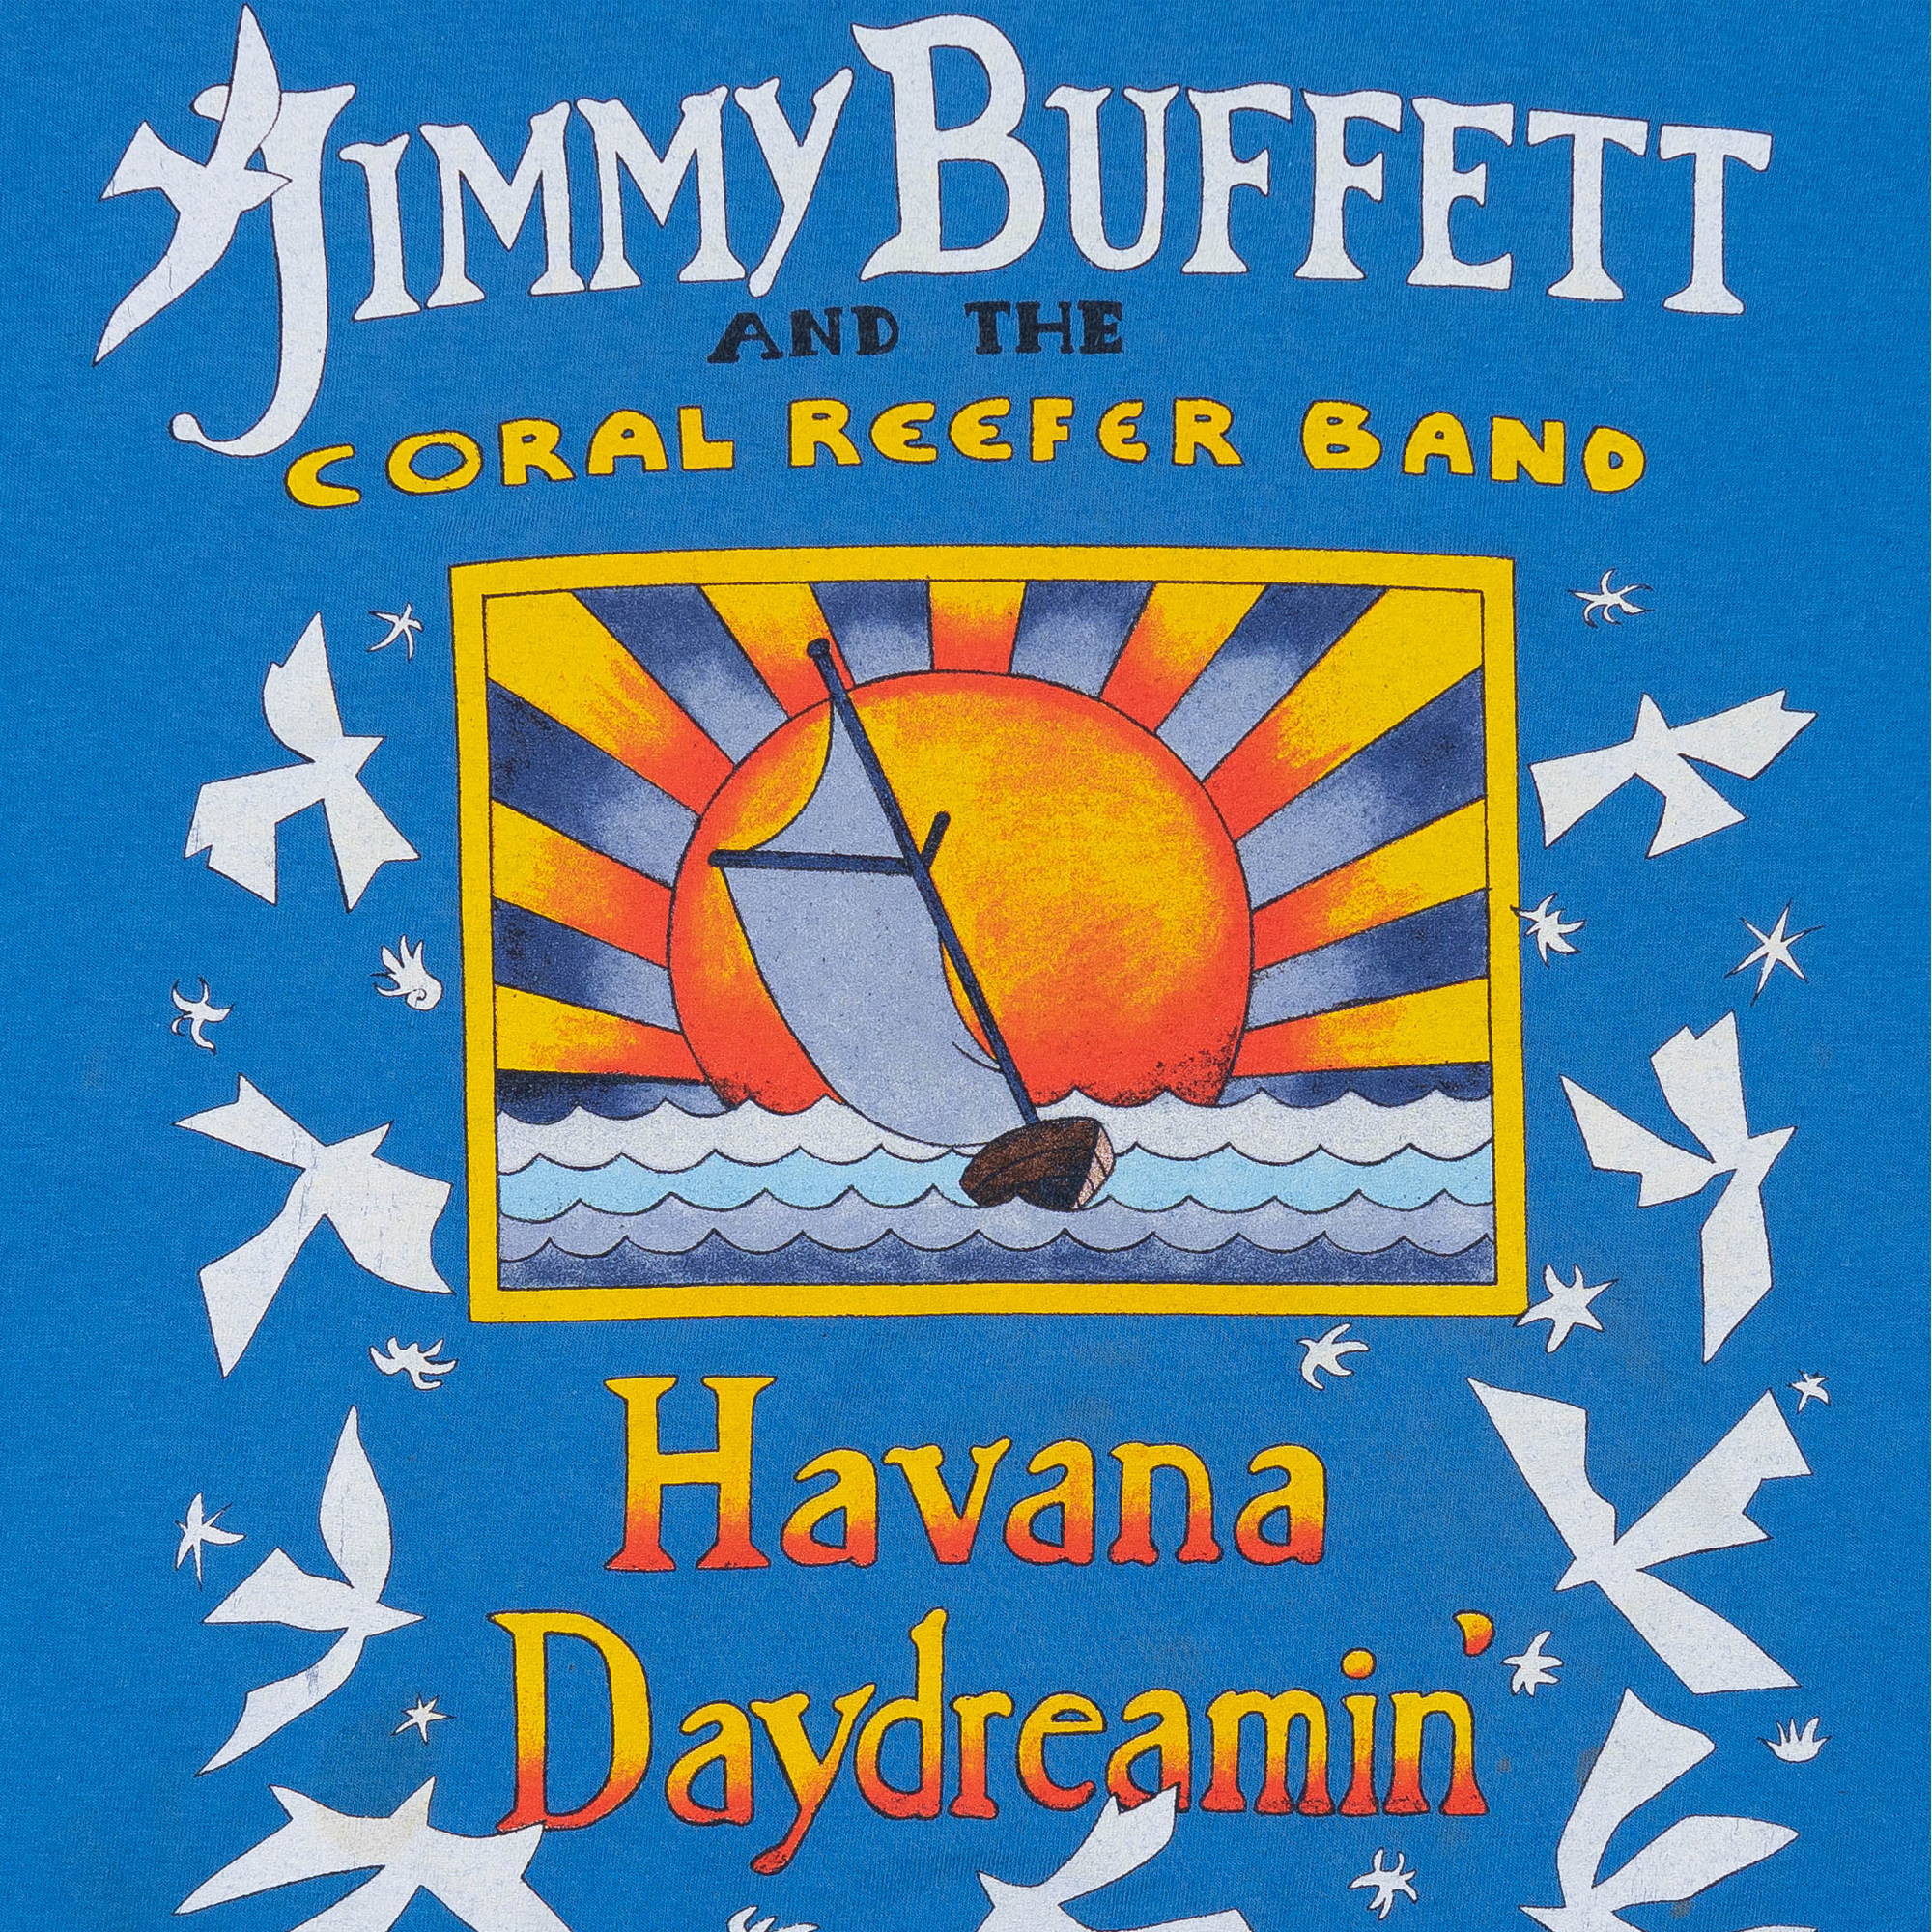 Jimmy Buffett & The Coral Reefer Band Havana Daydreamin' Tour 1998 Tee Blue-PLUS